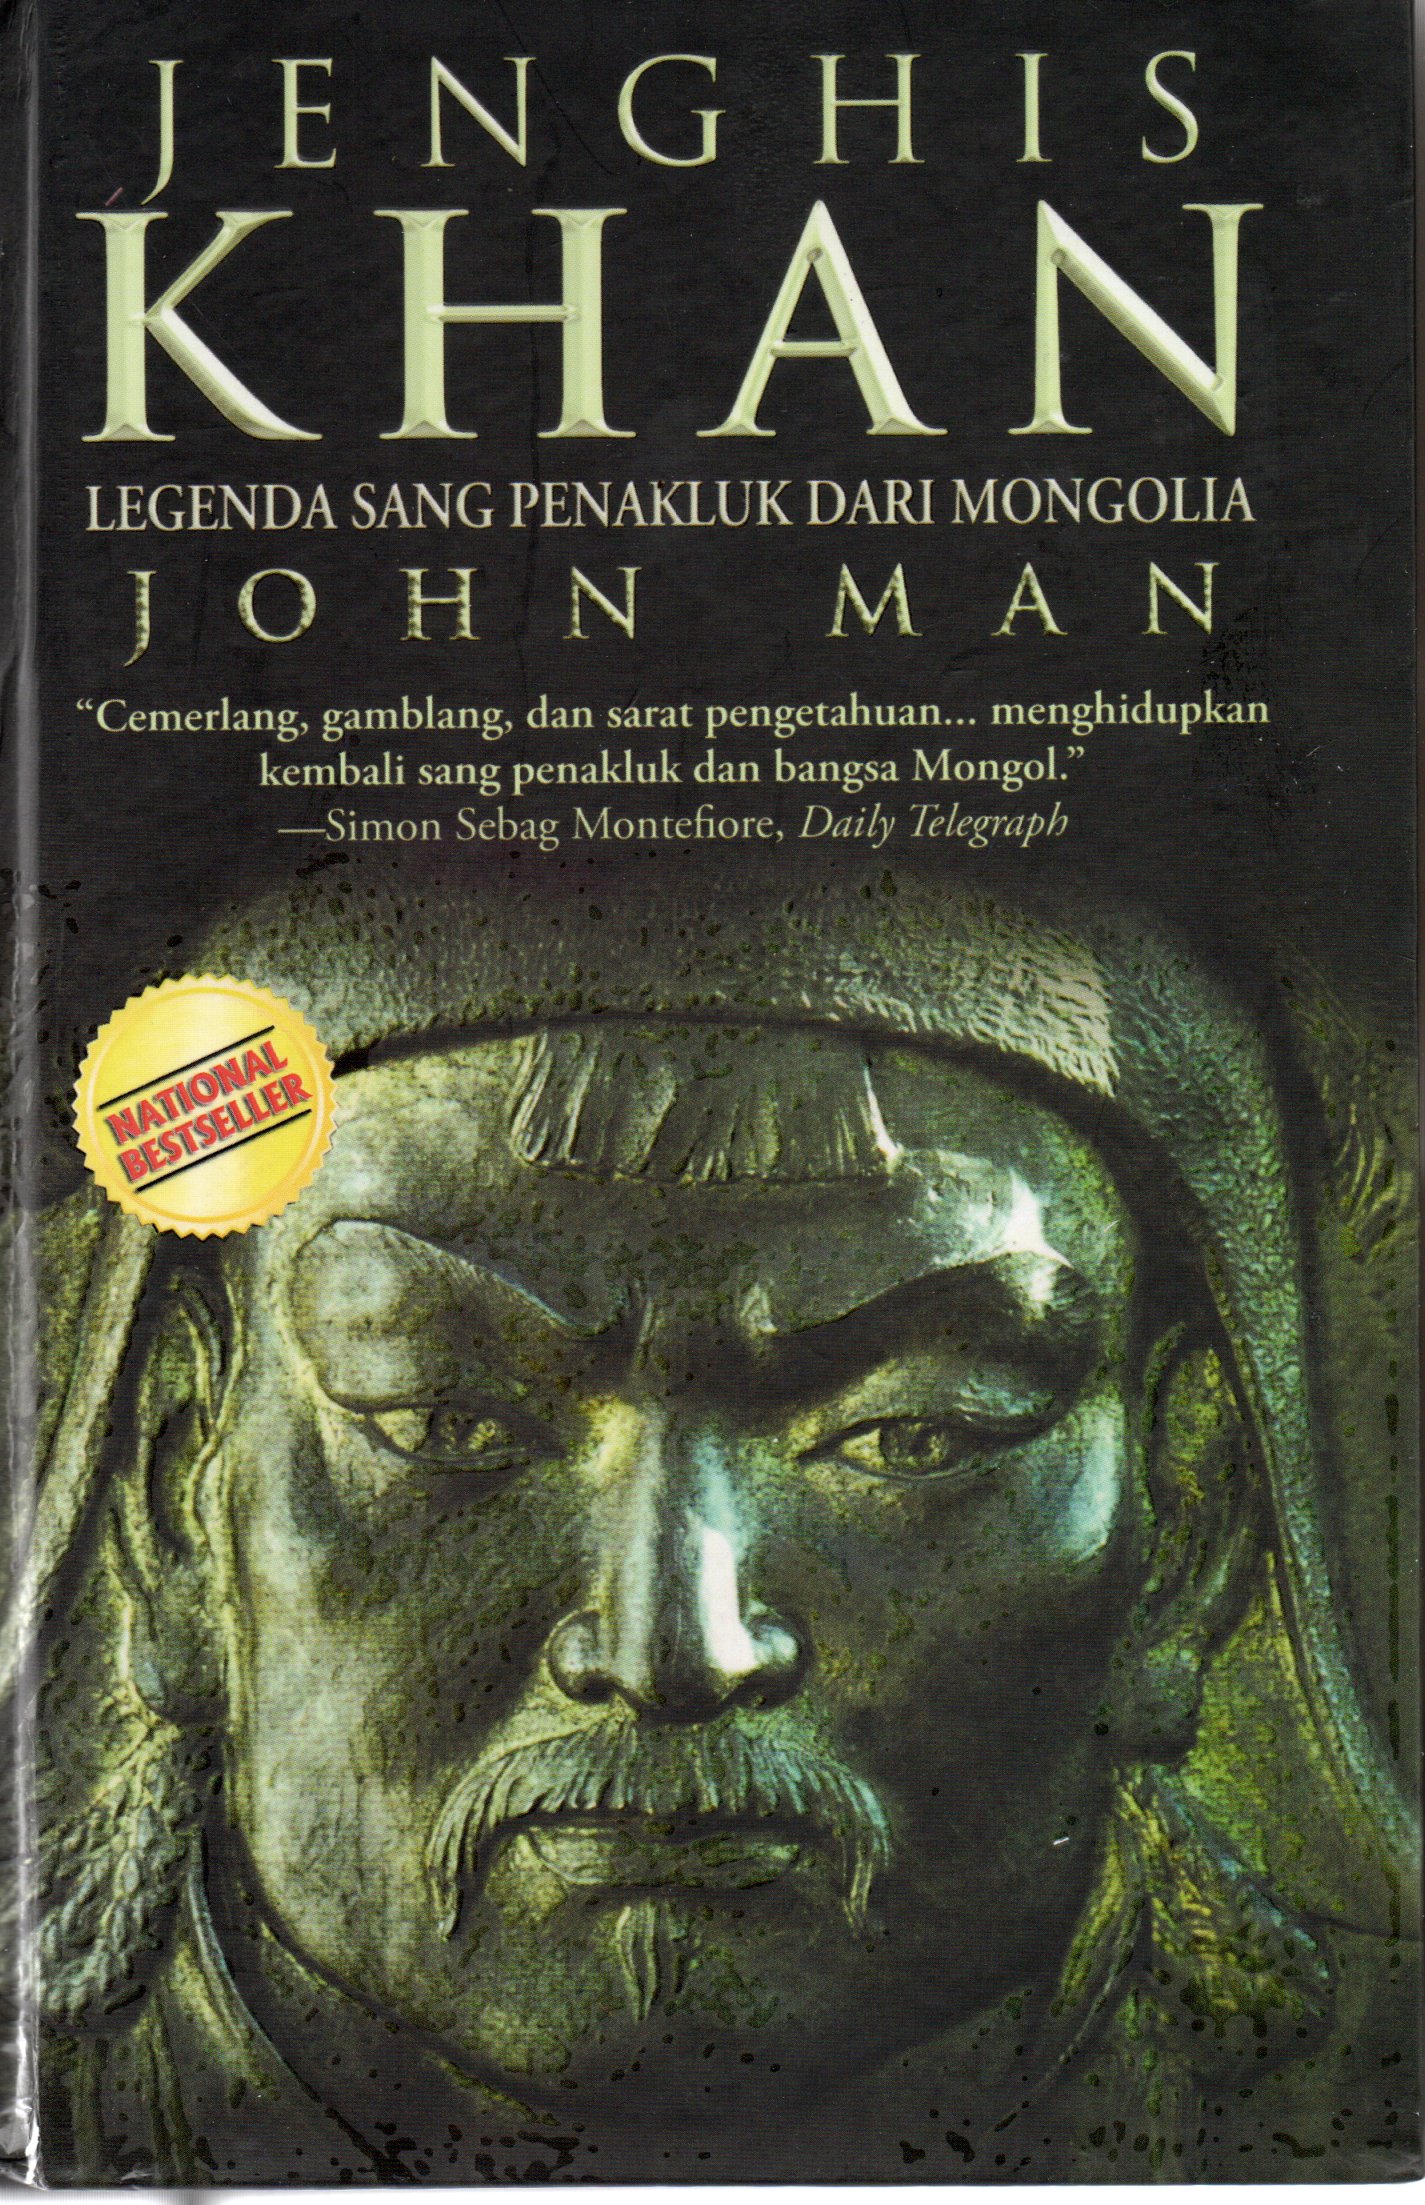 Jenghis Khan legenda sang penakluk dari Mongolia/John Man